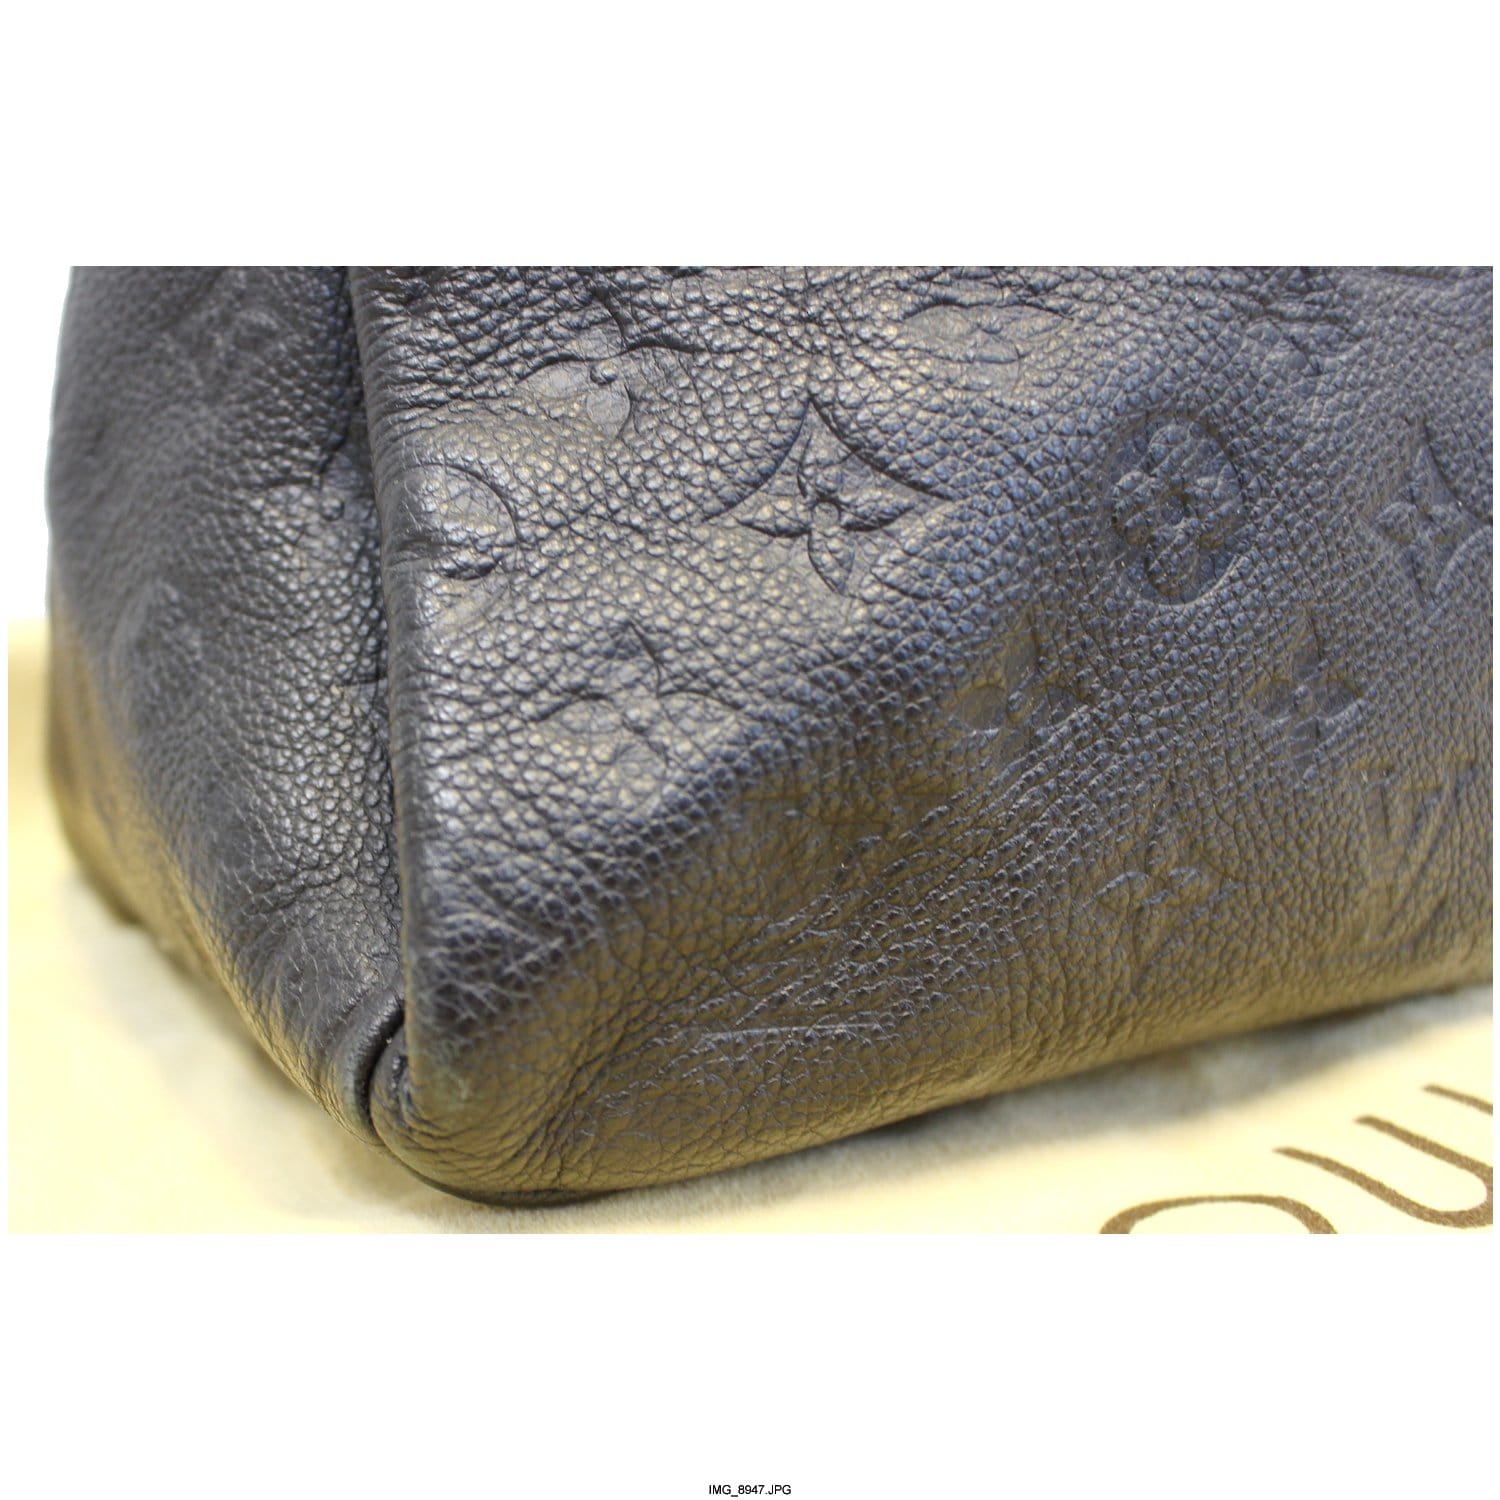 Louis Vuitton Artsy Infini Black Monogram Empreinte Leather Hobo